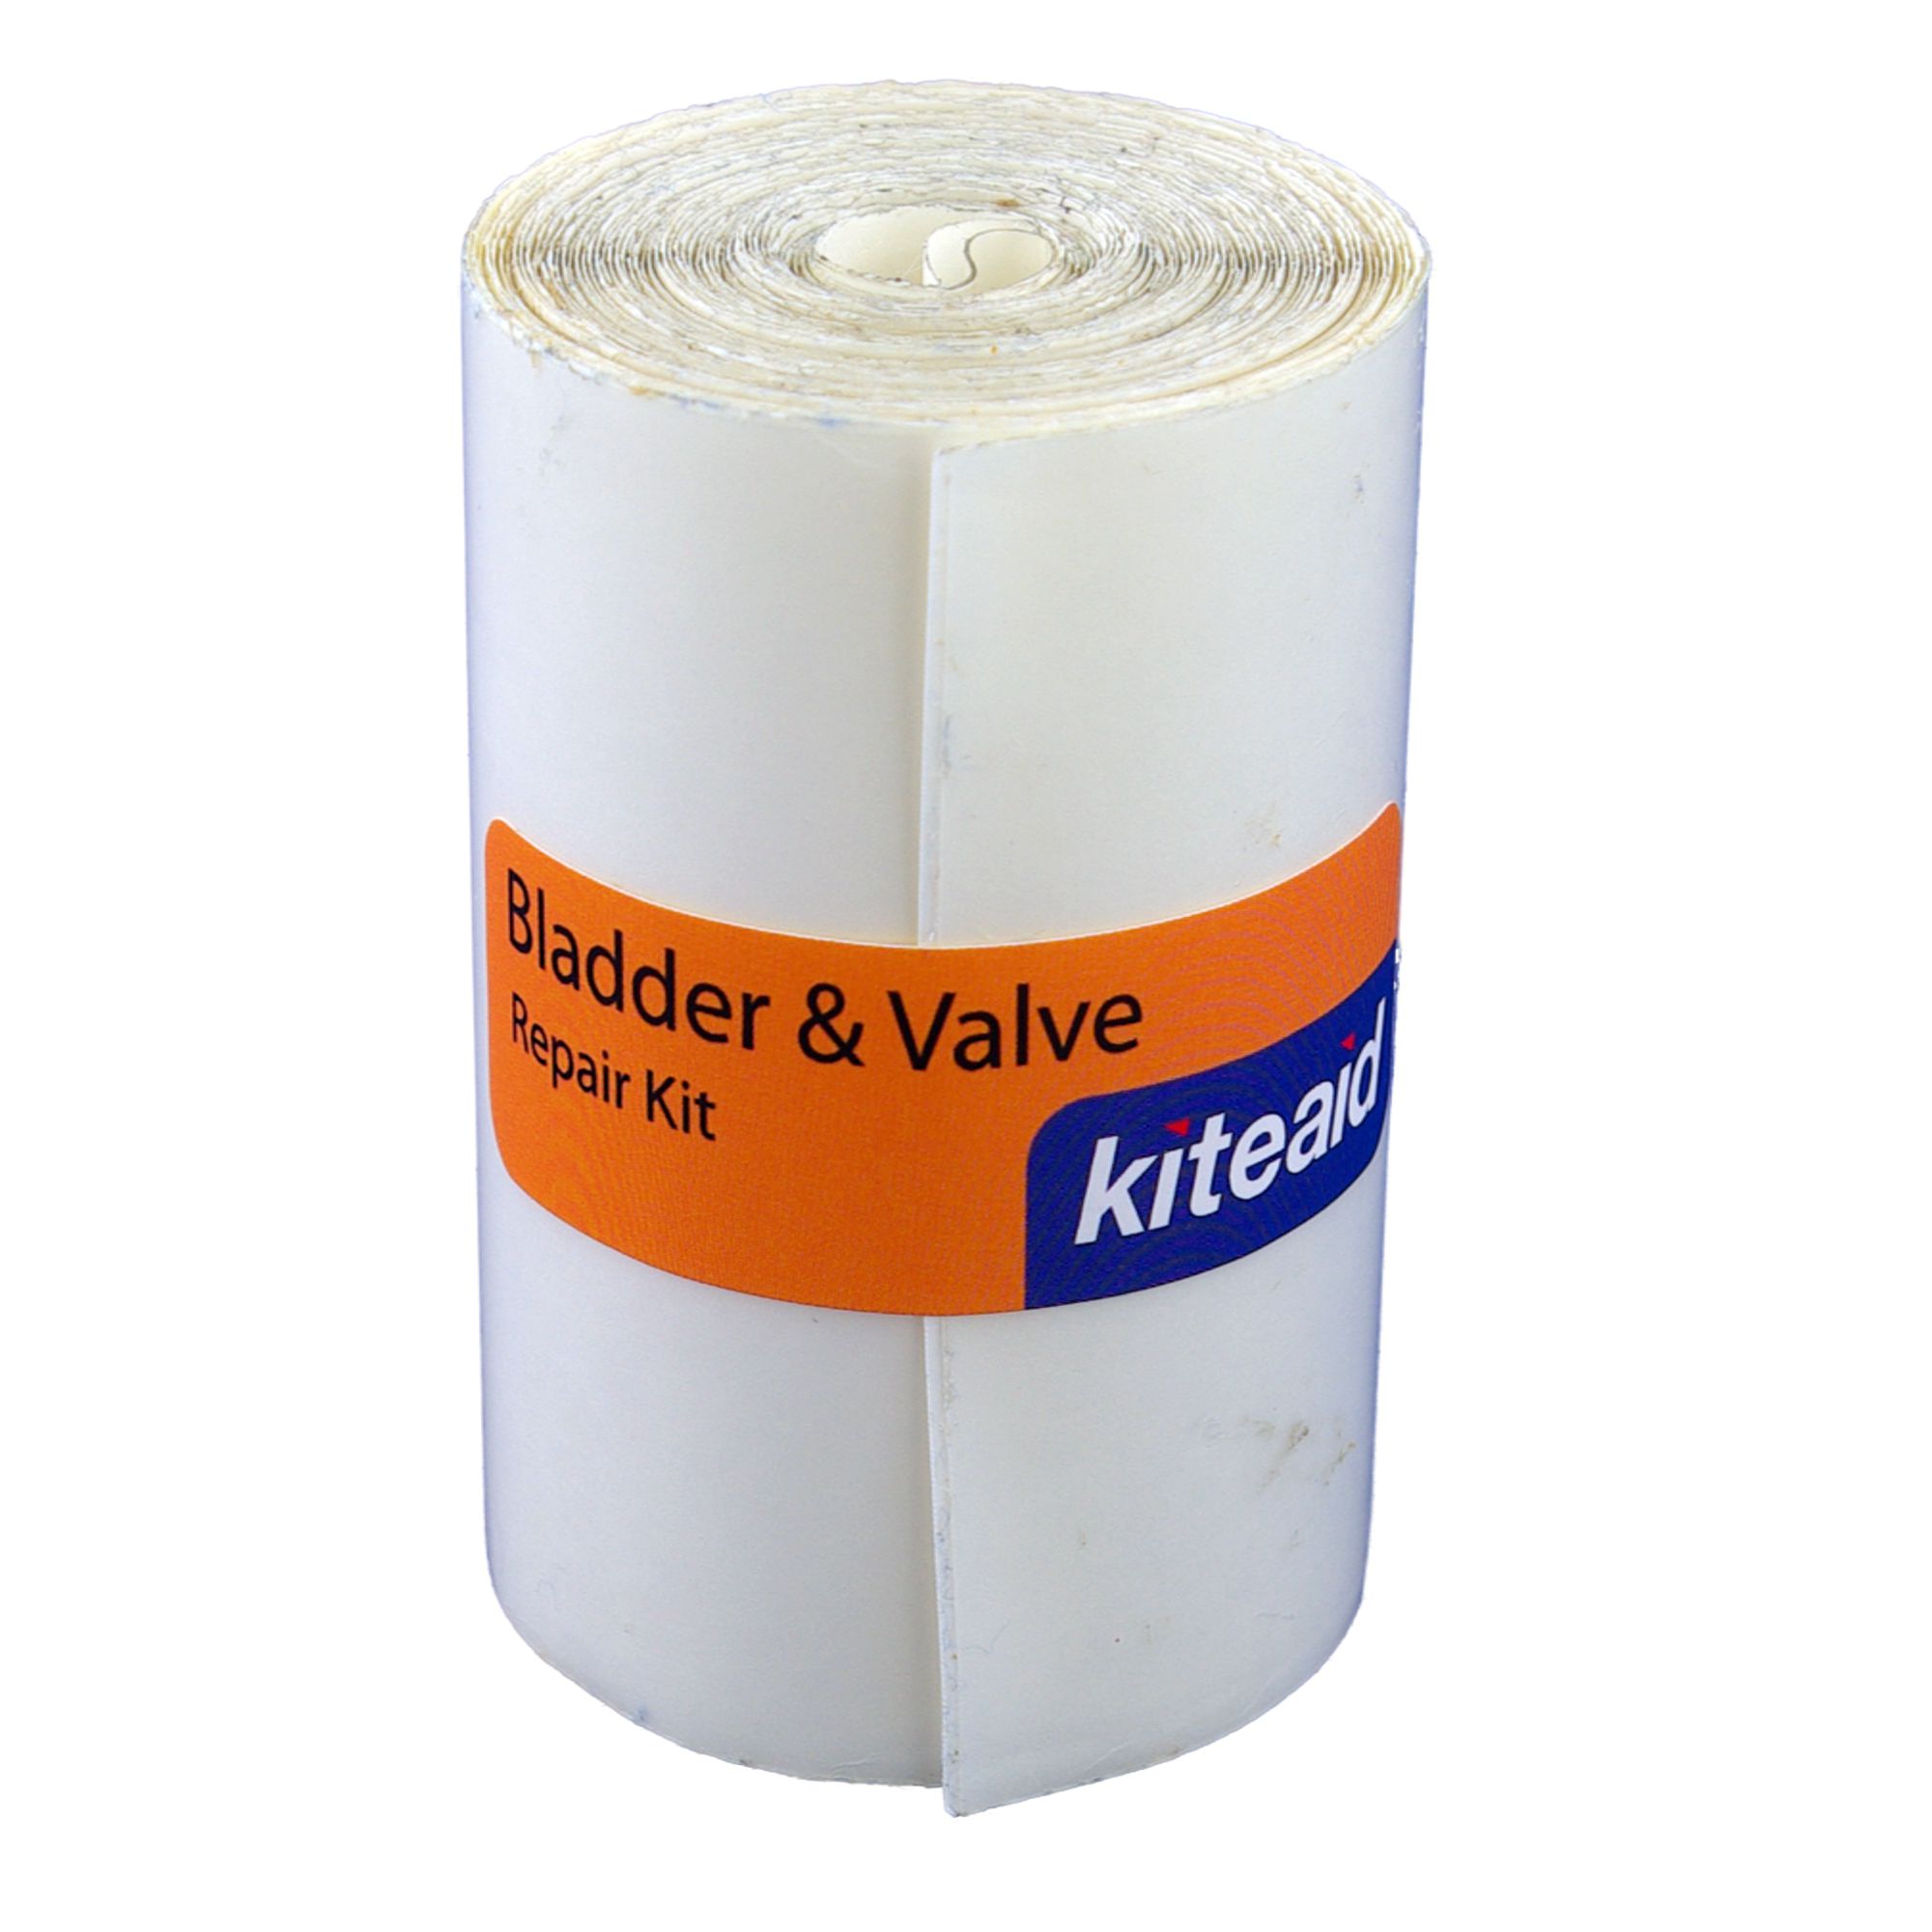 KiteAid Reparatur Bladder Reload Tape Kit 7,6 x 300 cm